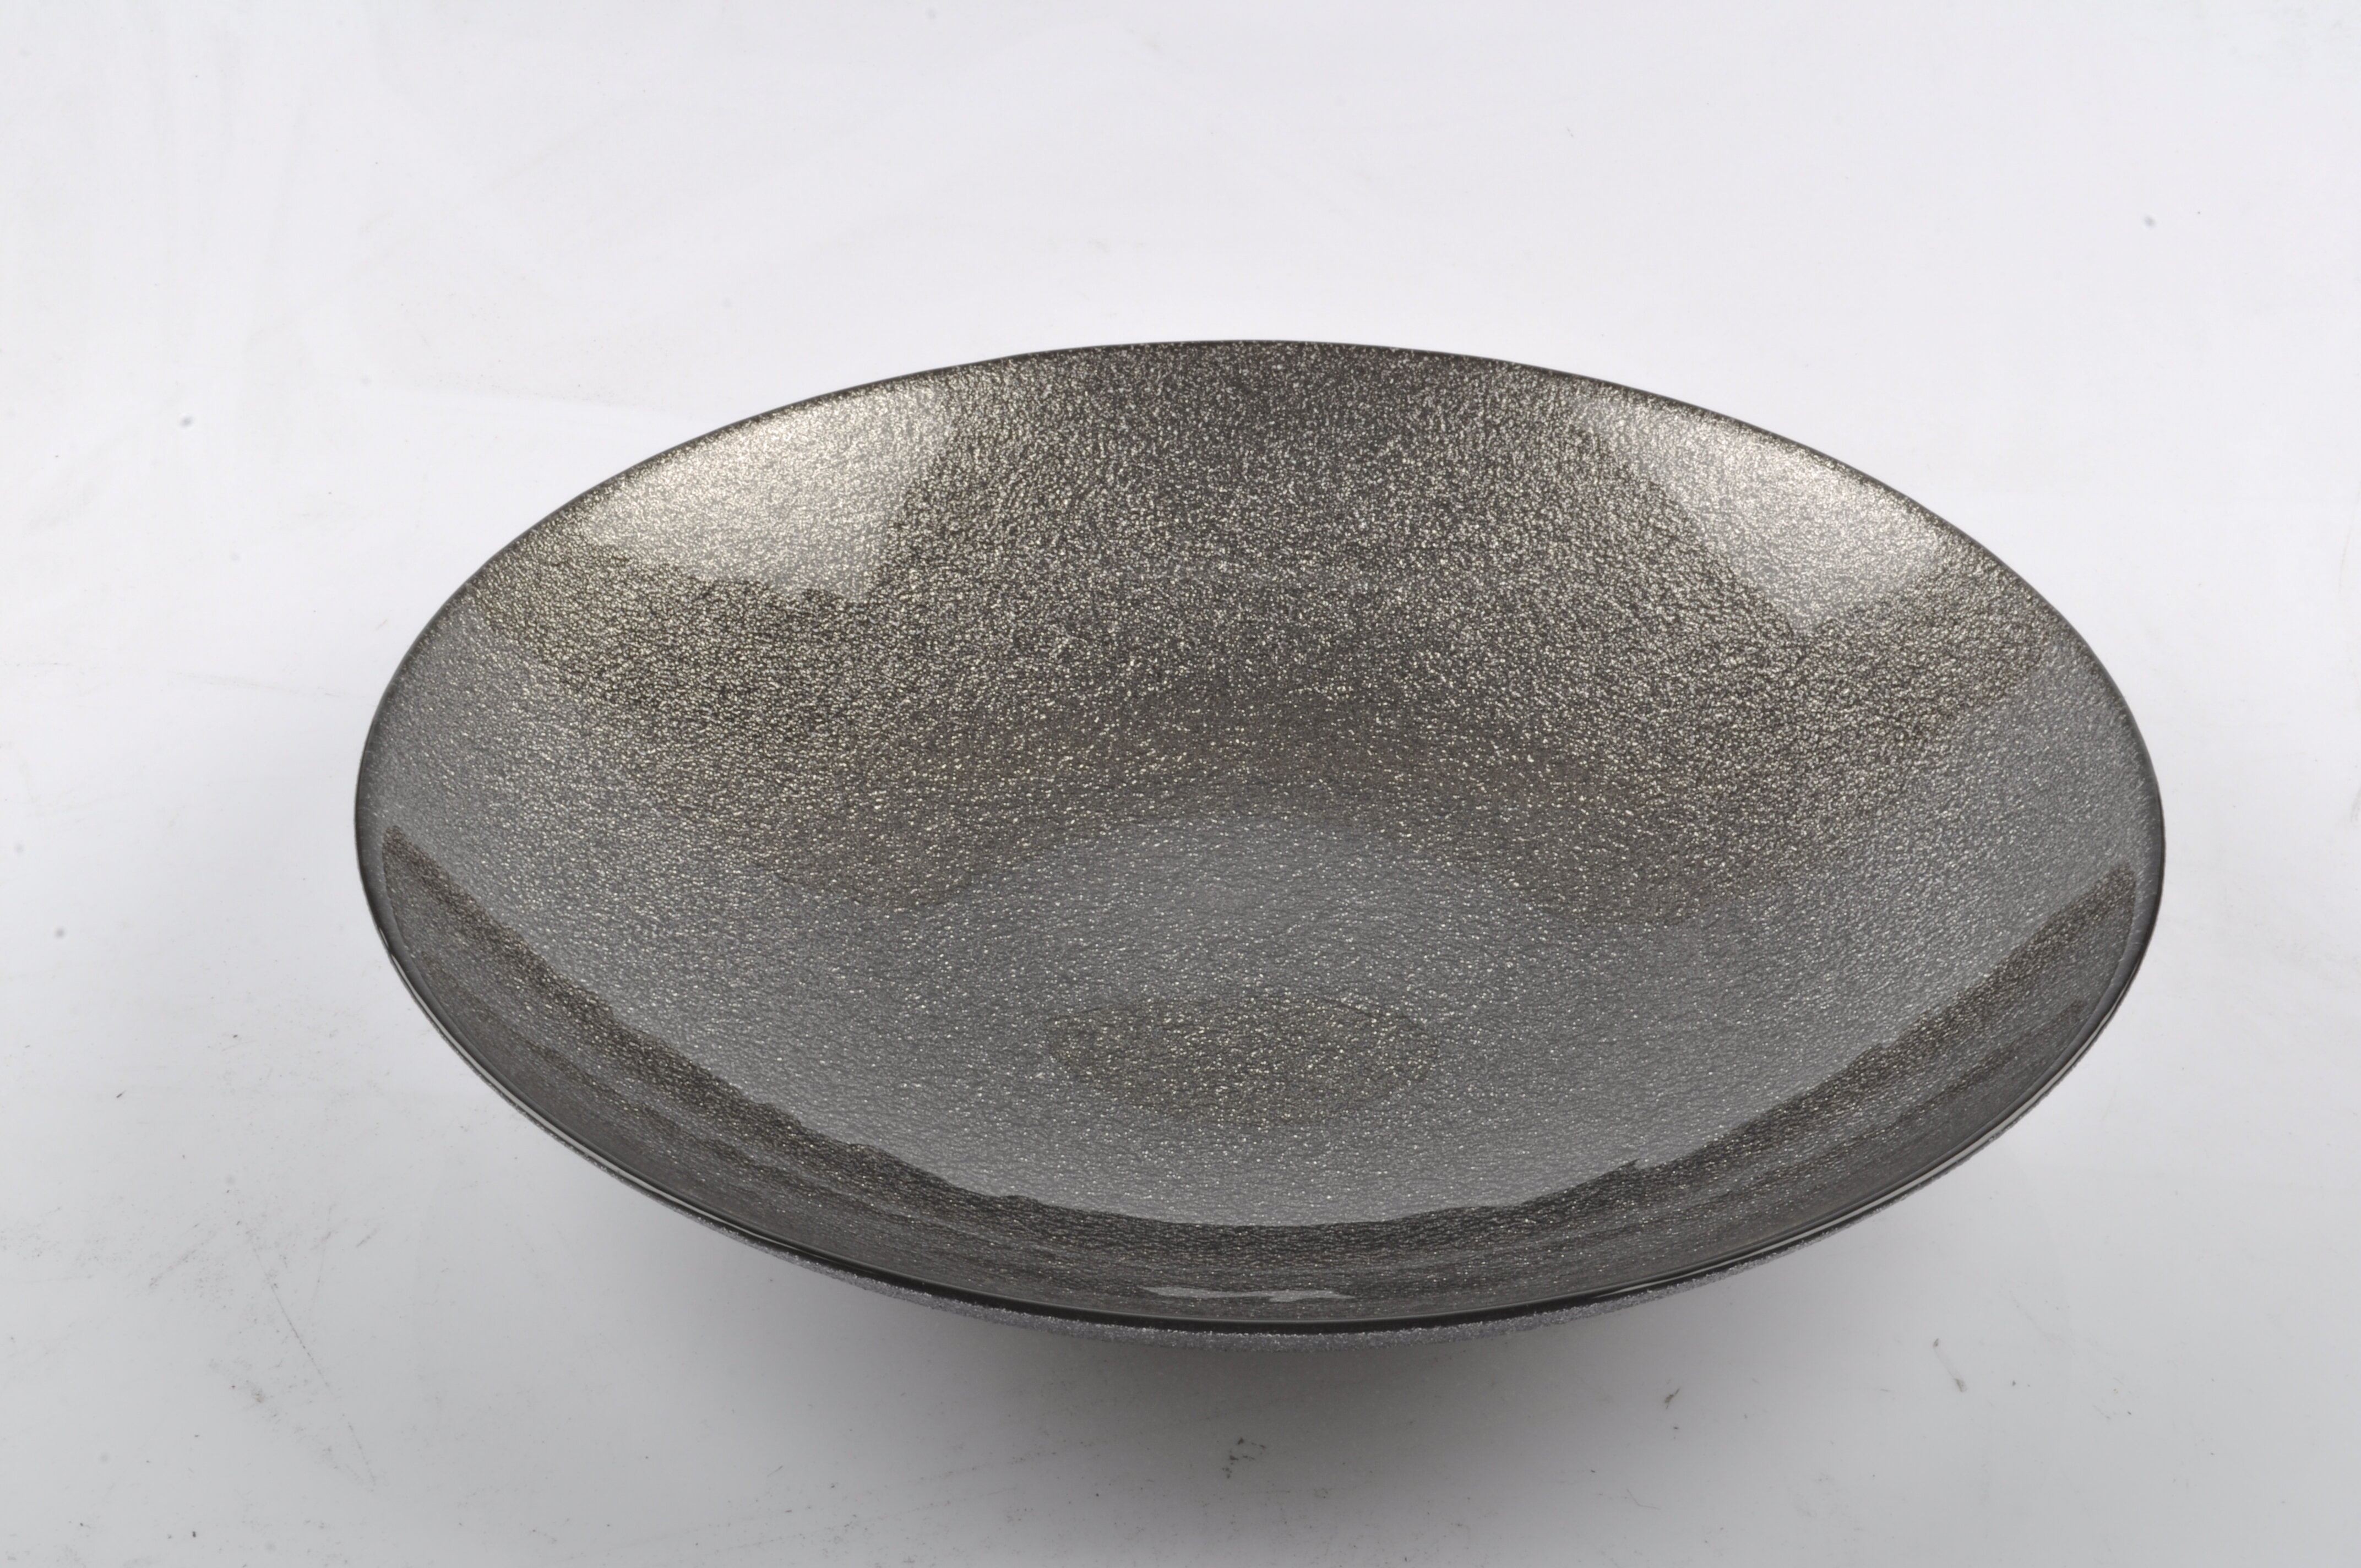 Joss & Main Iva Glass Decorative Bowl & Reviews | Wayfair